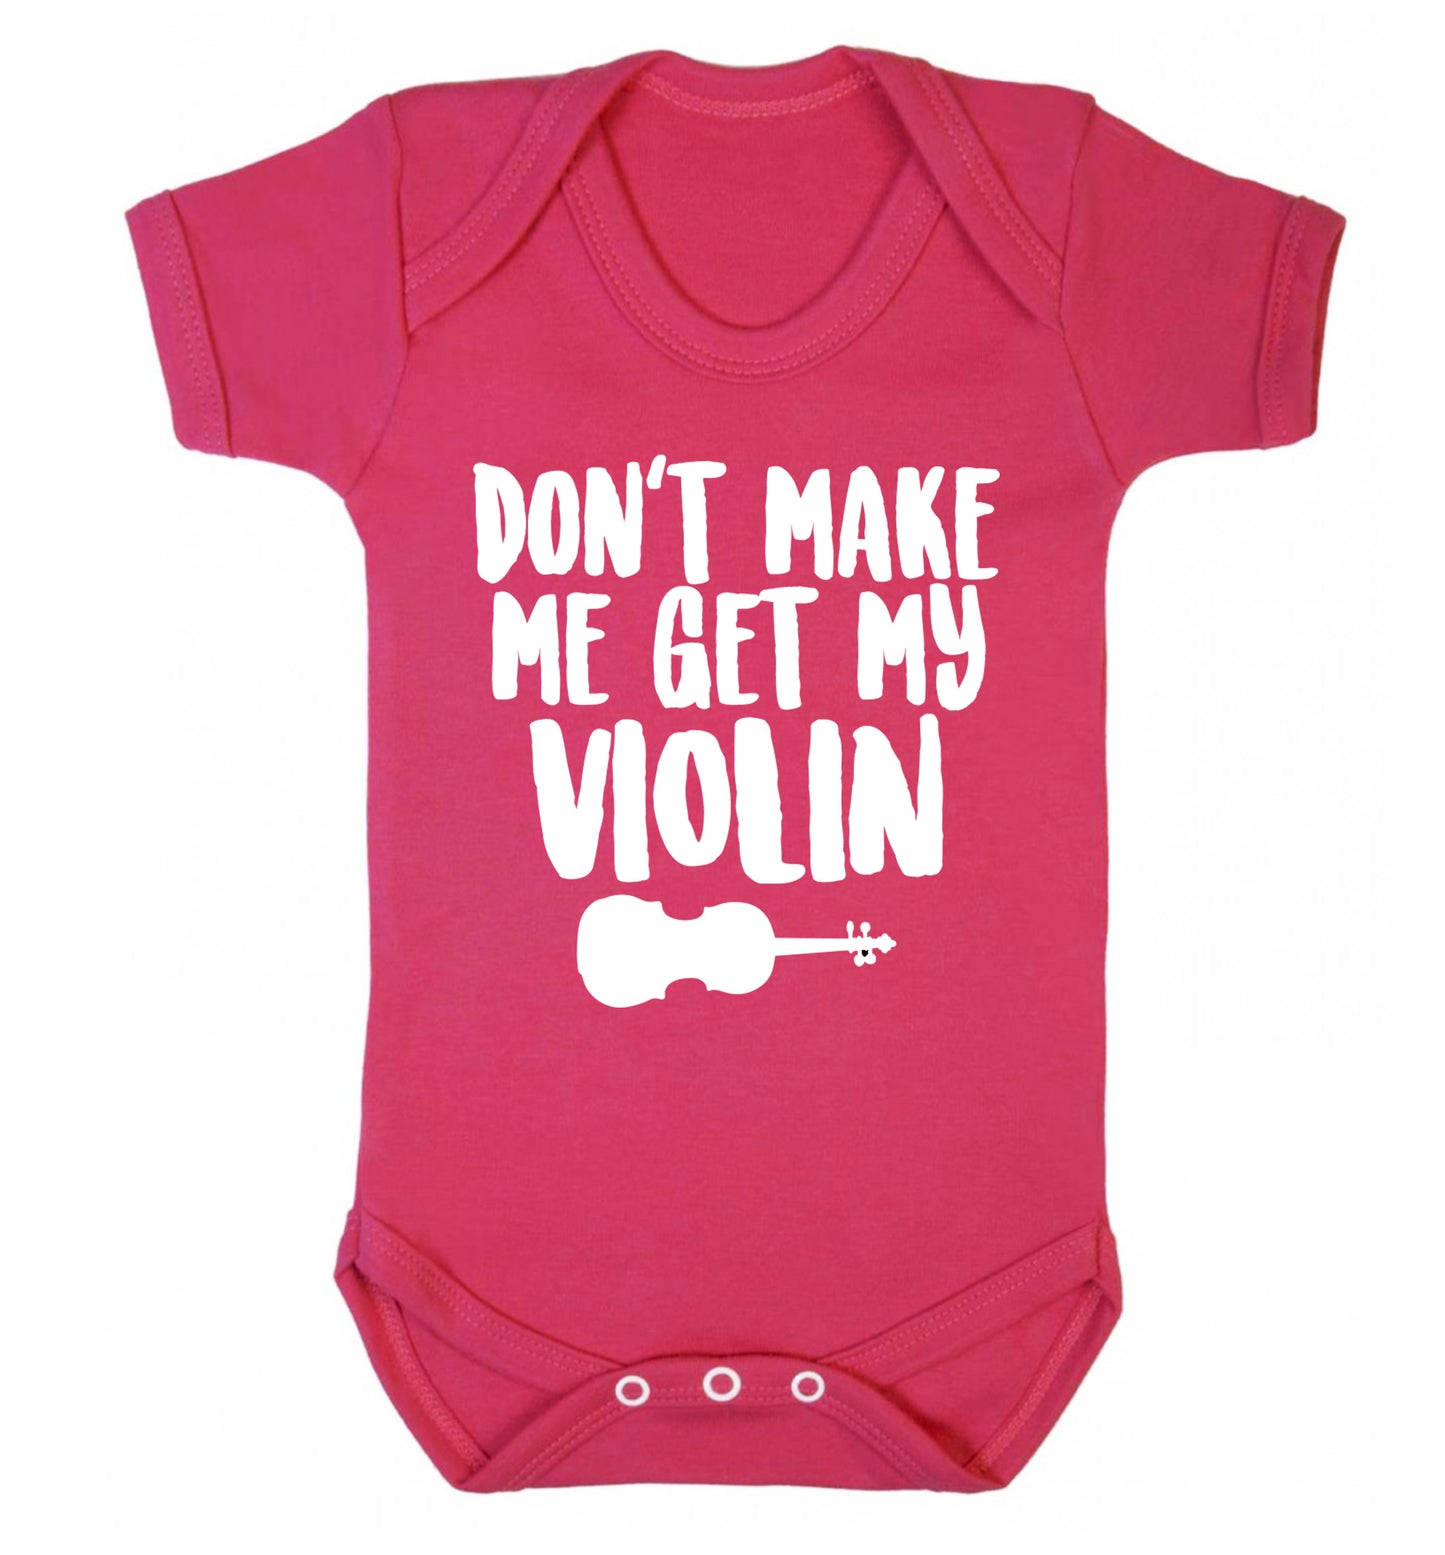 Don't make me get my violin Baby Vest dark pink 18-24 months